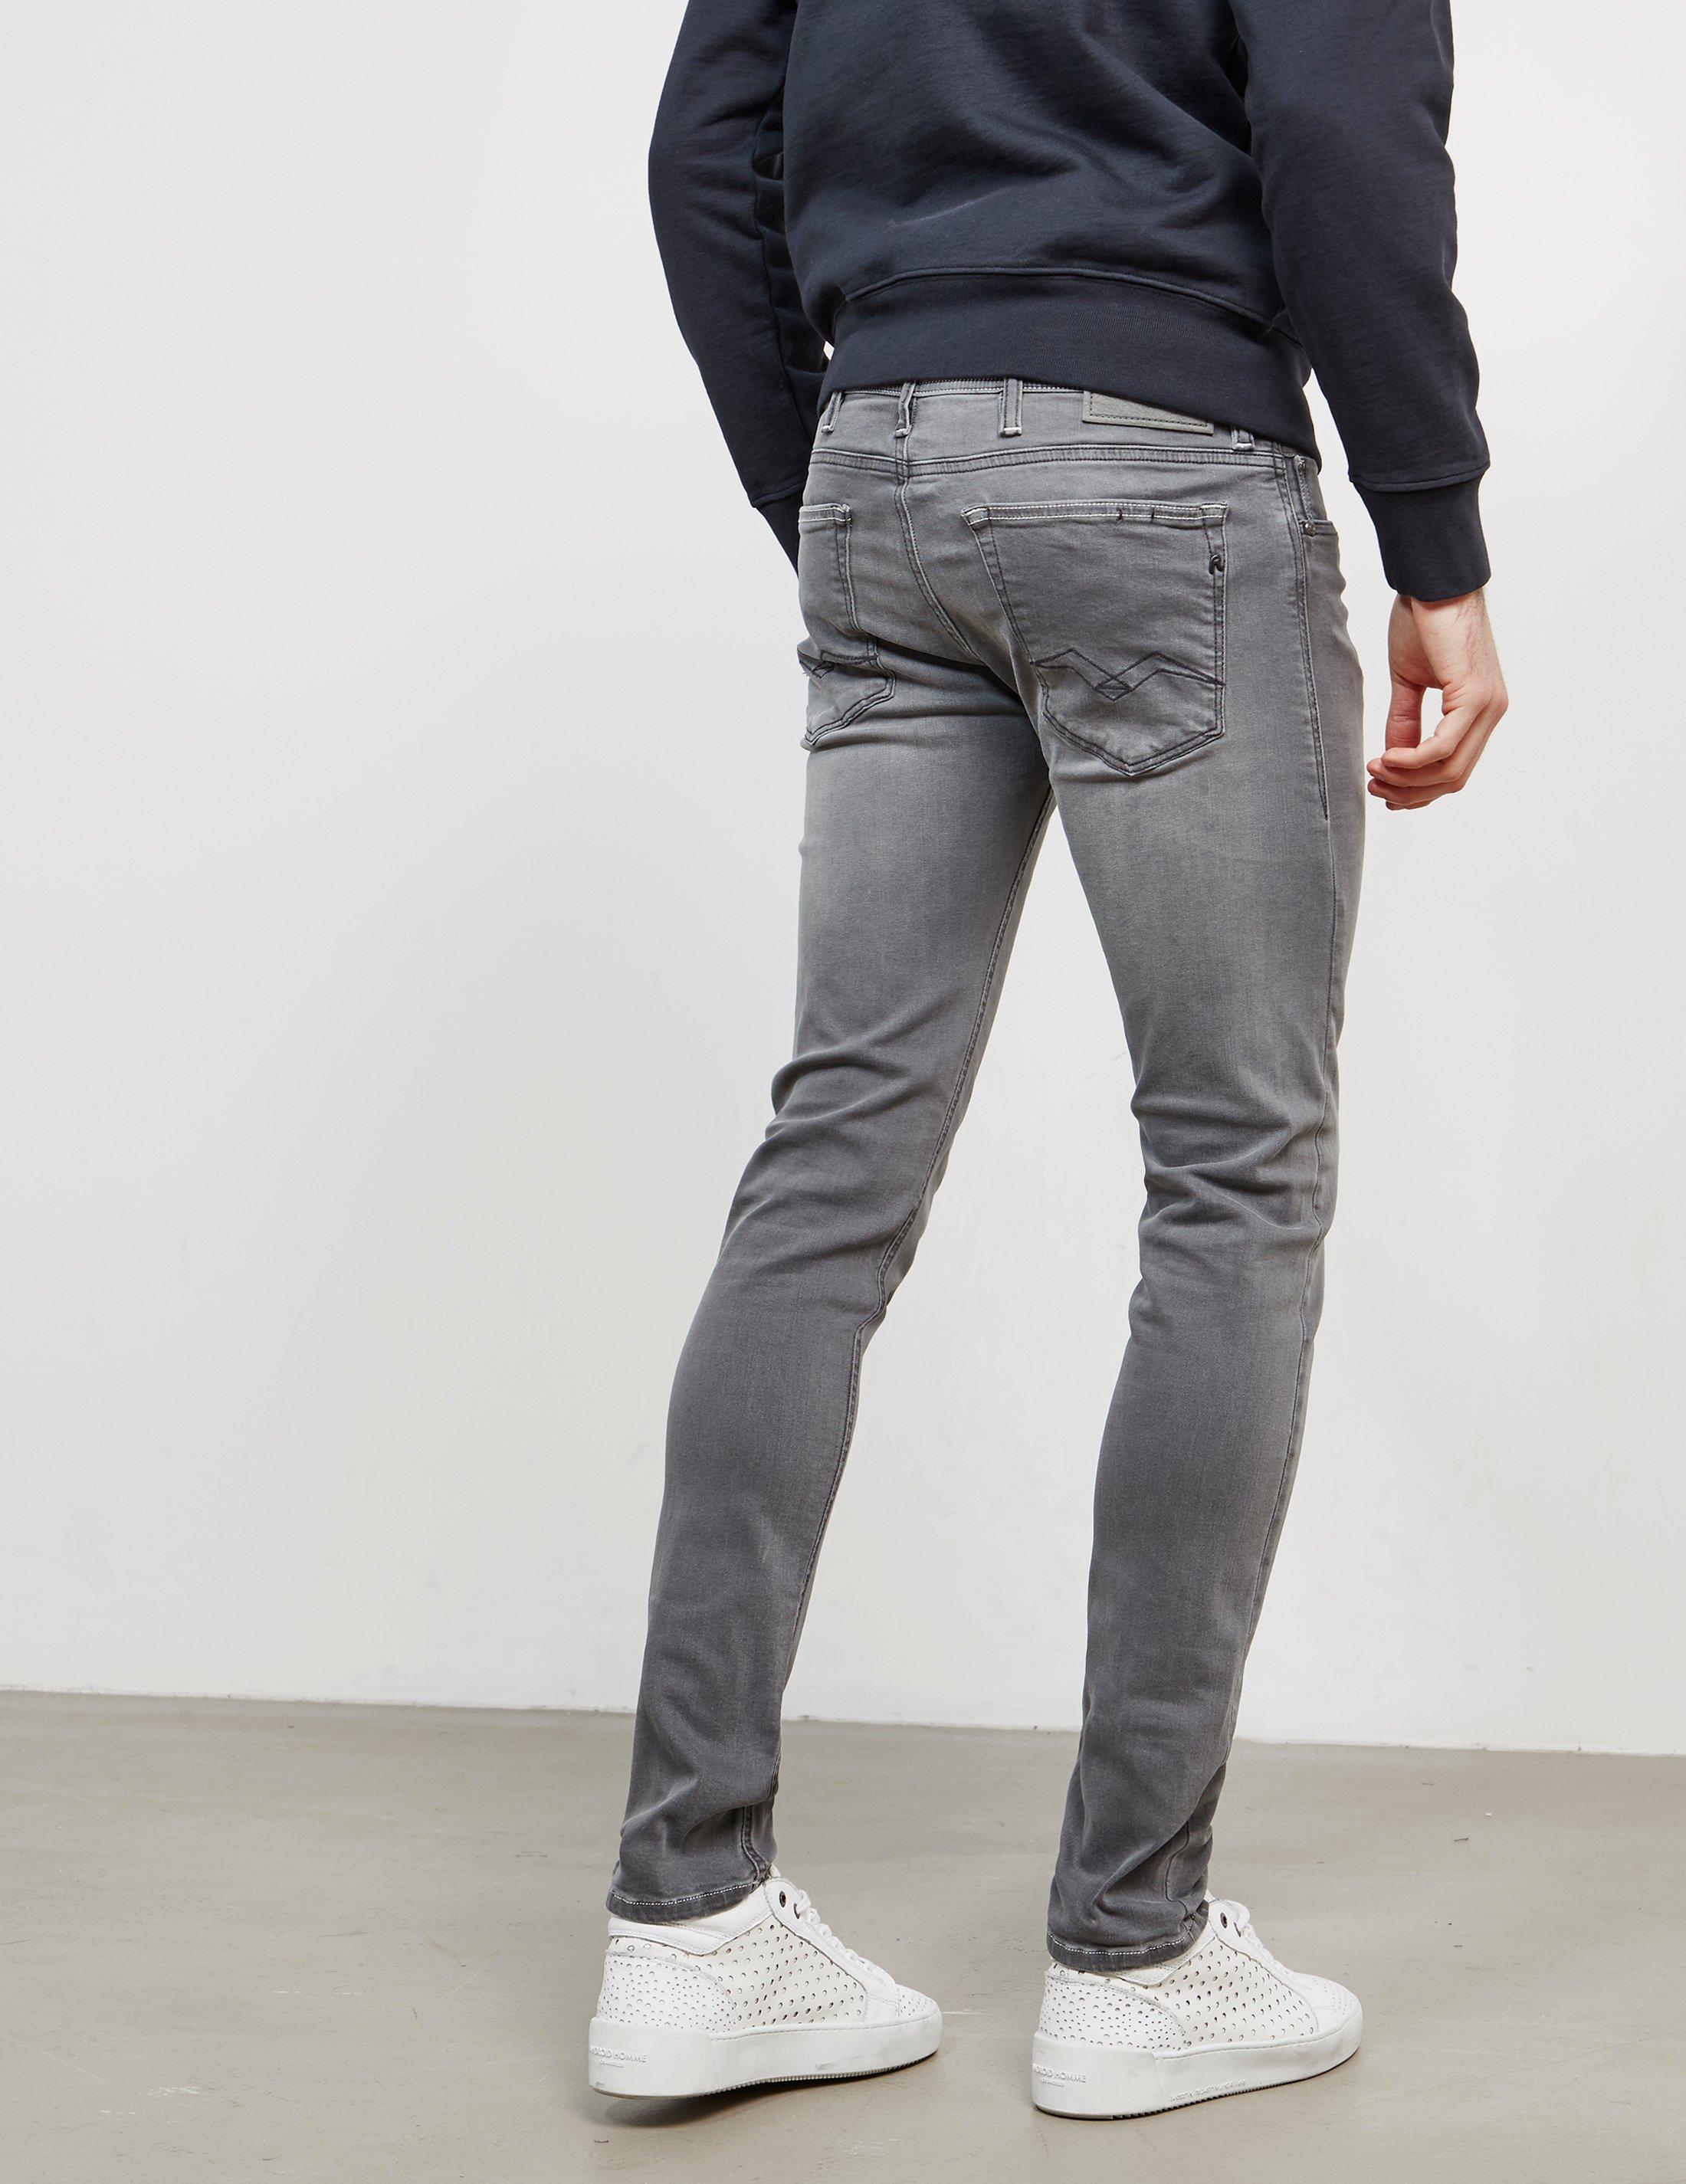 Replay Denim Jondrill Skinny Jeans Grey in Gray for Men - Lyst